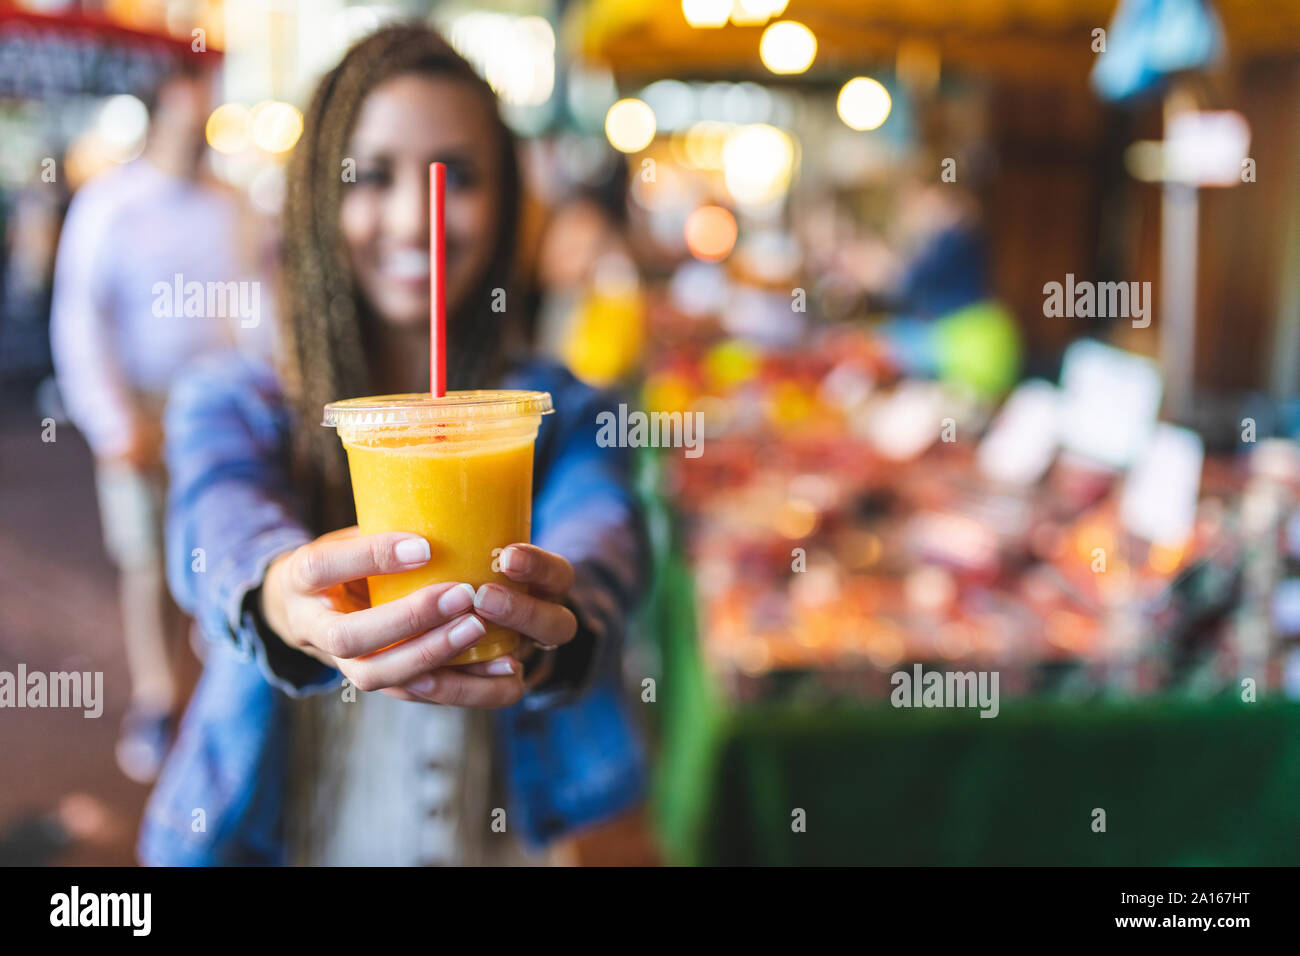 https://c8.alamy.com/comp/2A167HT/womans-hands-holding-plastic-cup-of-fresh-orange-juice-close-up-2A167HT.jpg